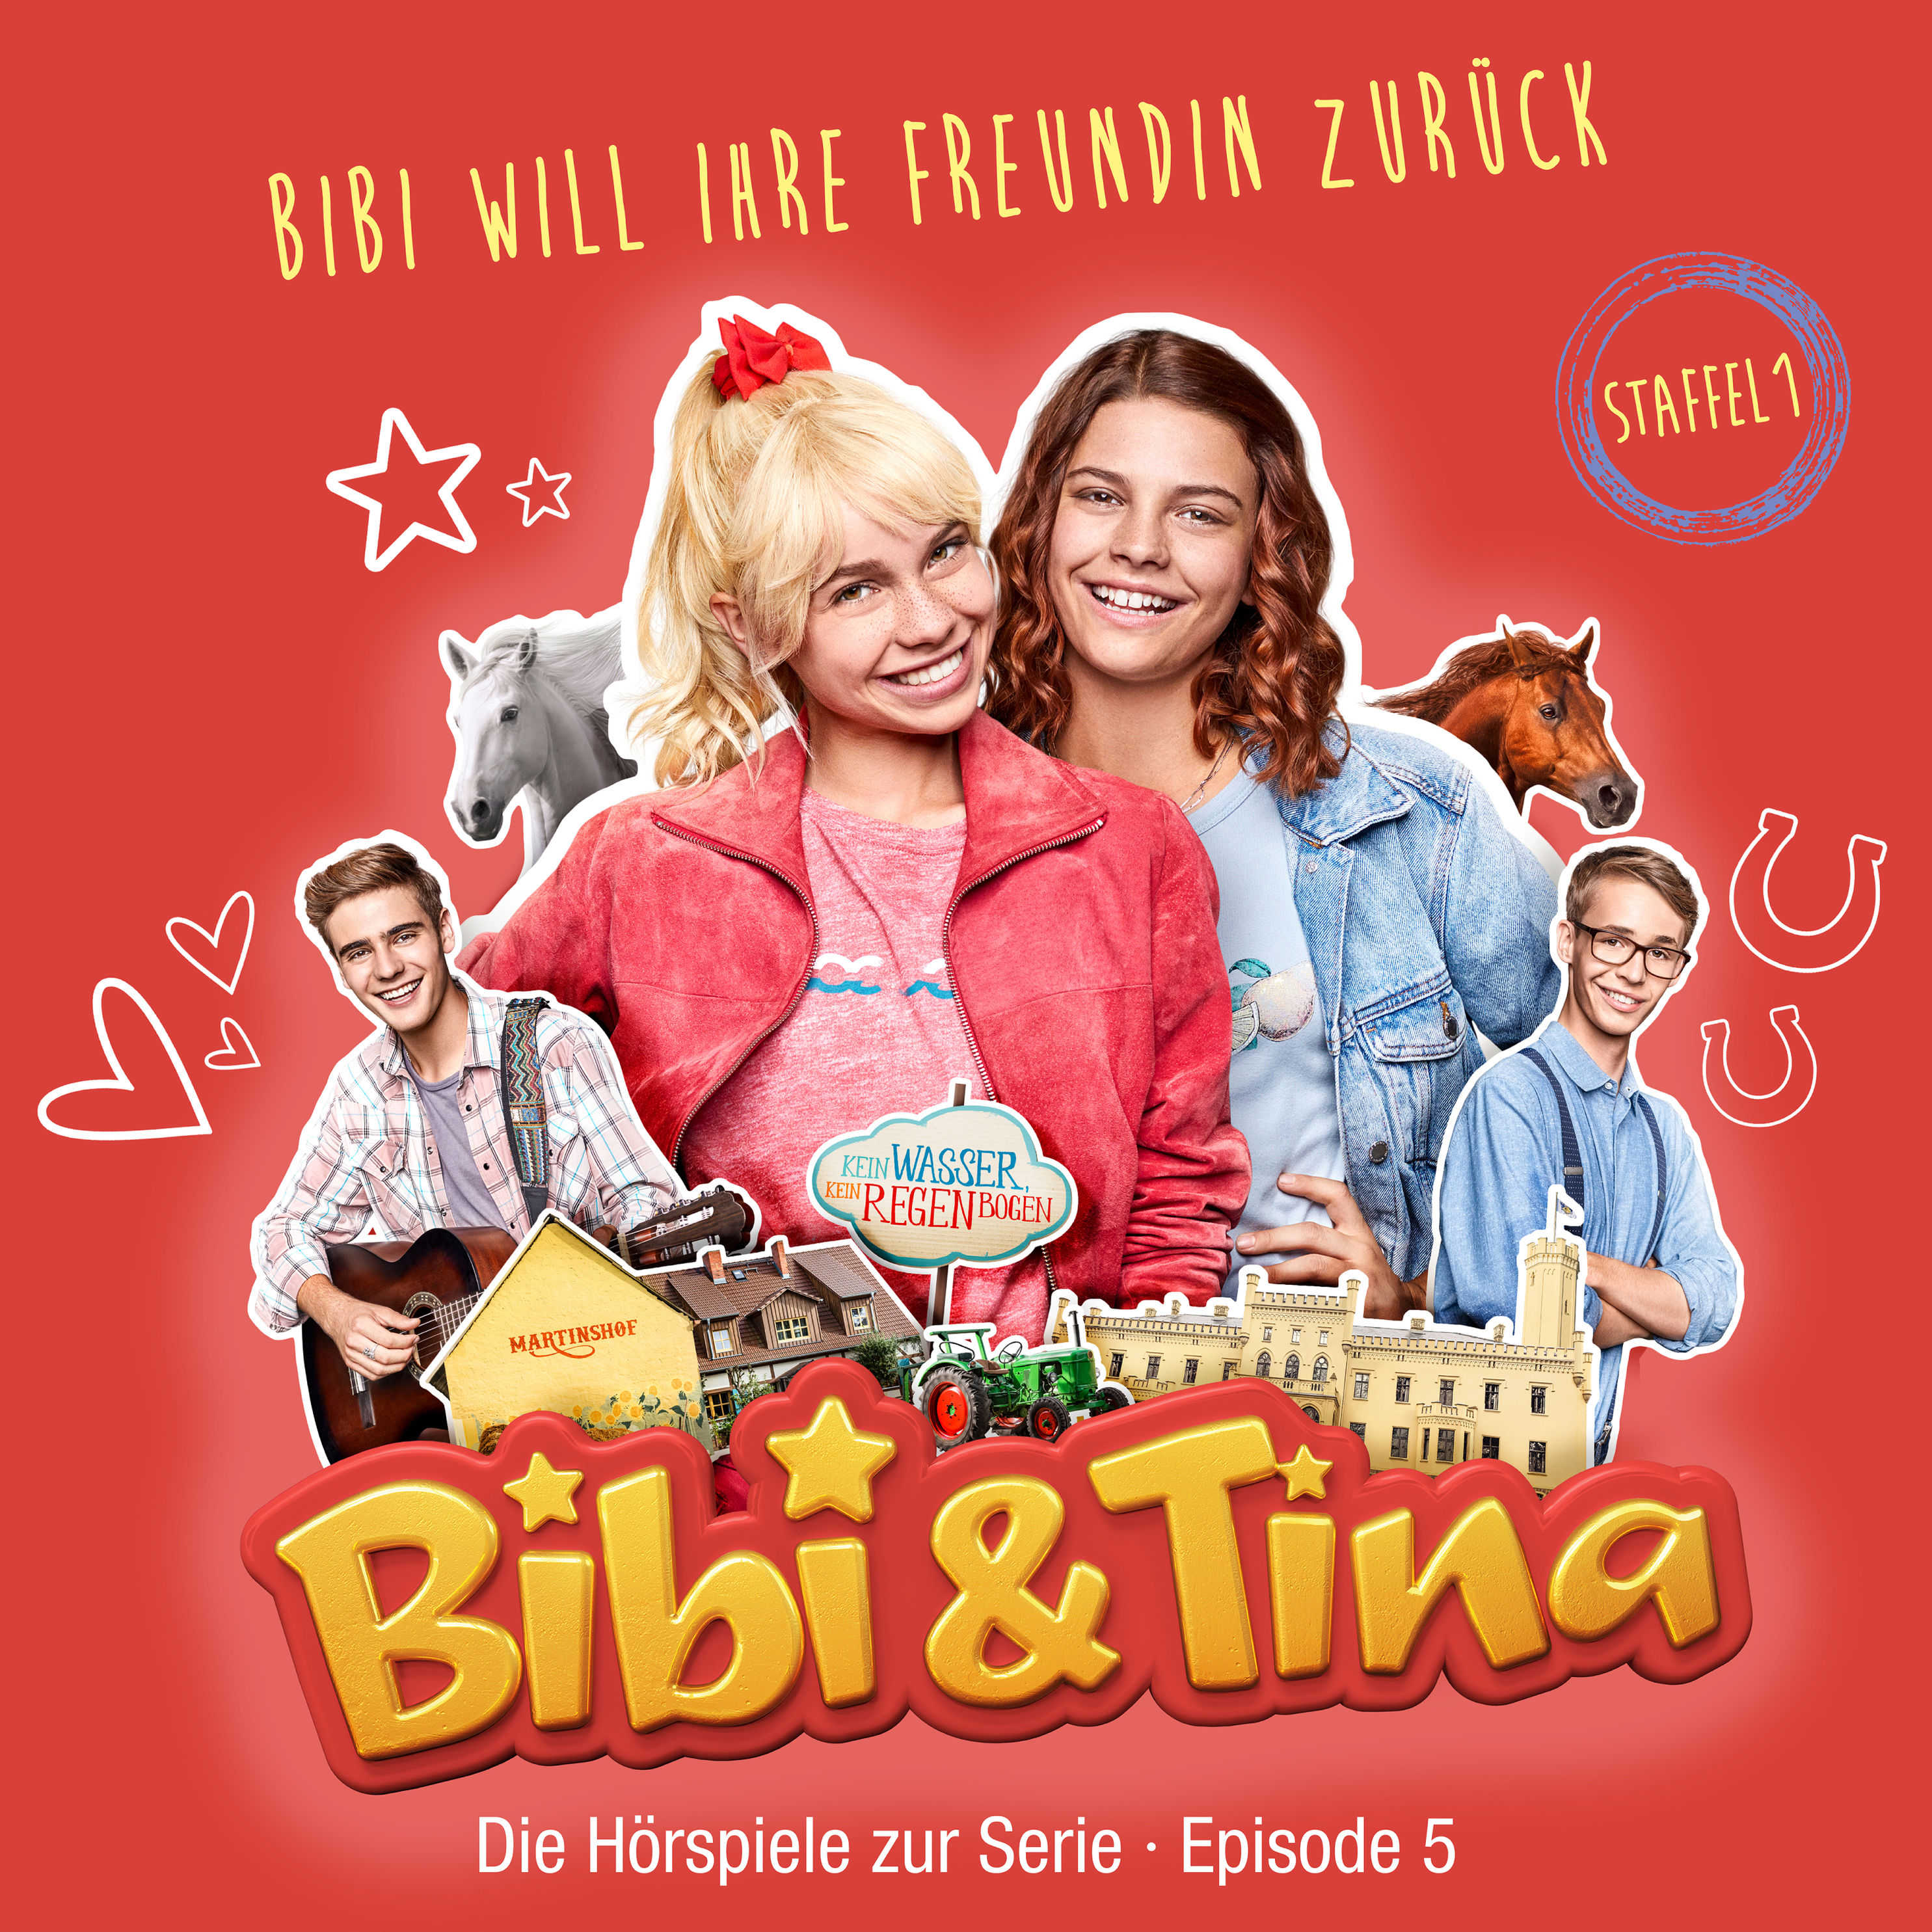 Bibi & Tina - 5 - Bibi & Tina - S1 05: Bibi will ihre Freundin zurück  Hörspiel zur Serie Hörbuch Download